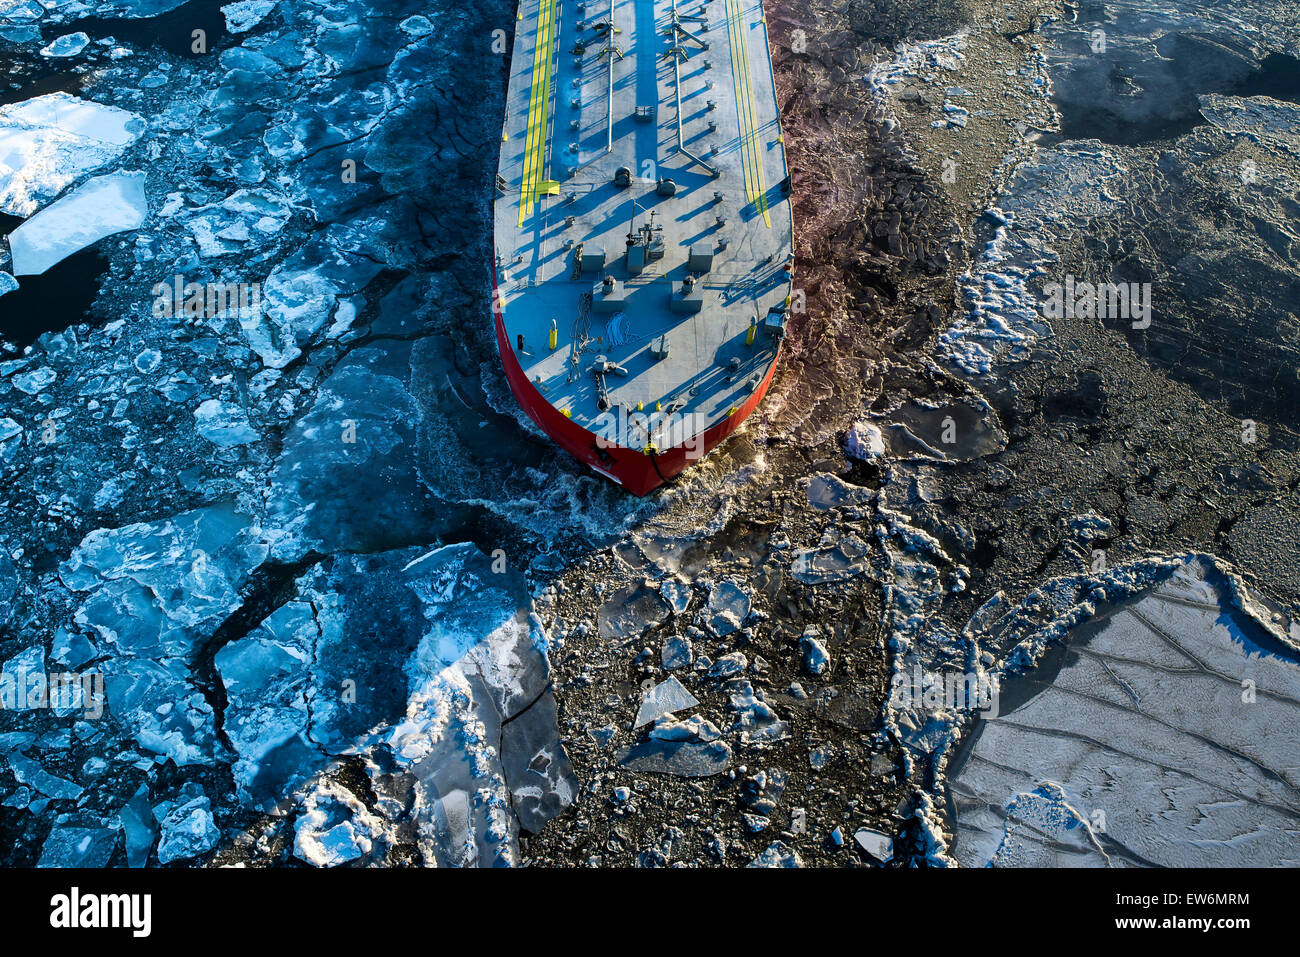 A large ship sails up a frozen river Stock Photo